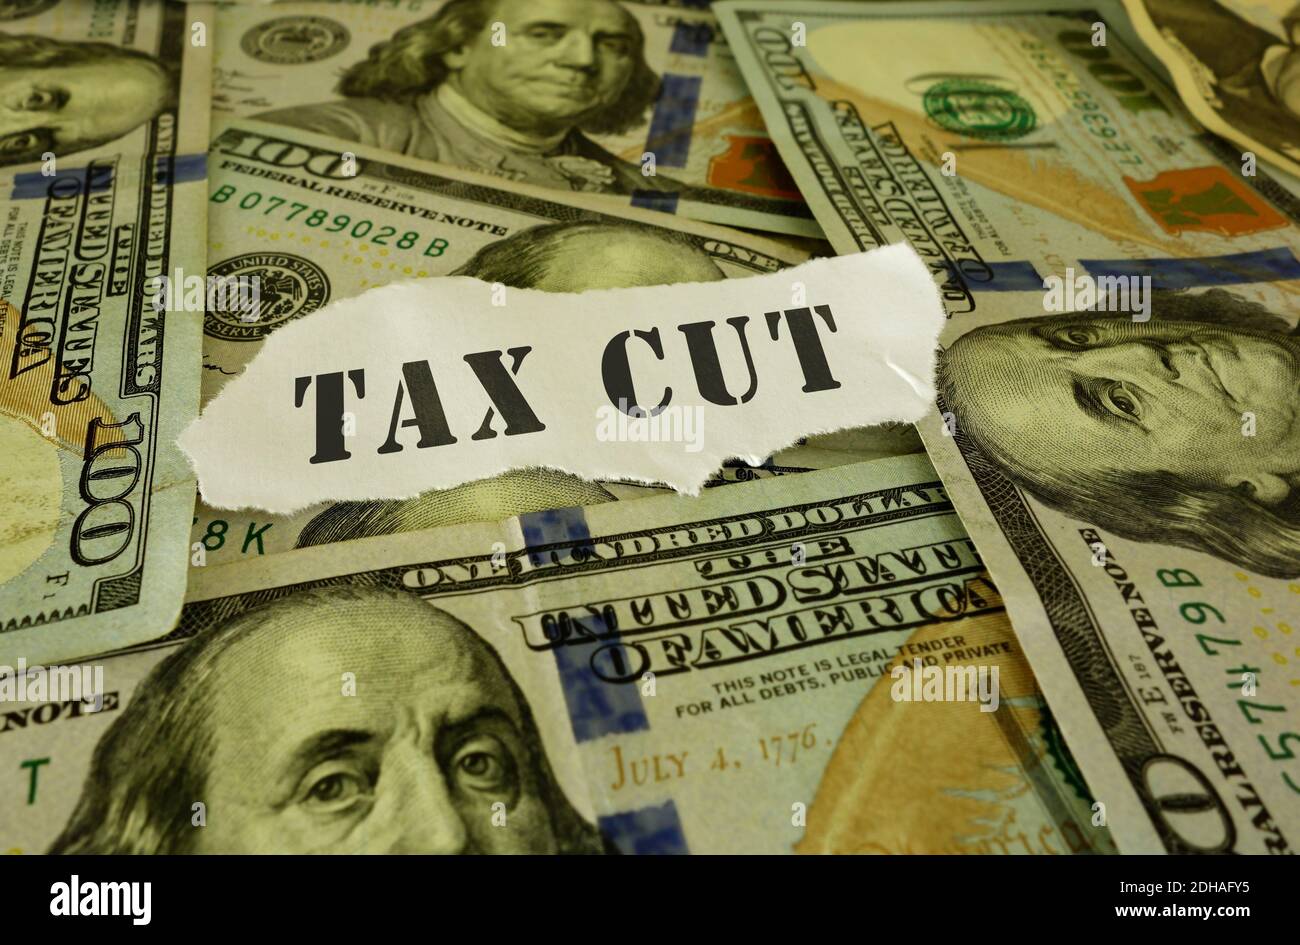 Tax cut money Stock Photo